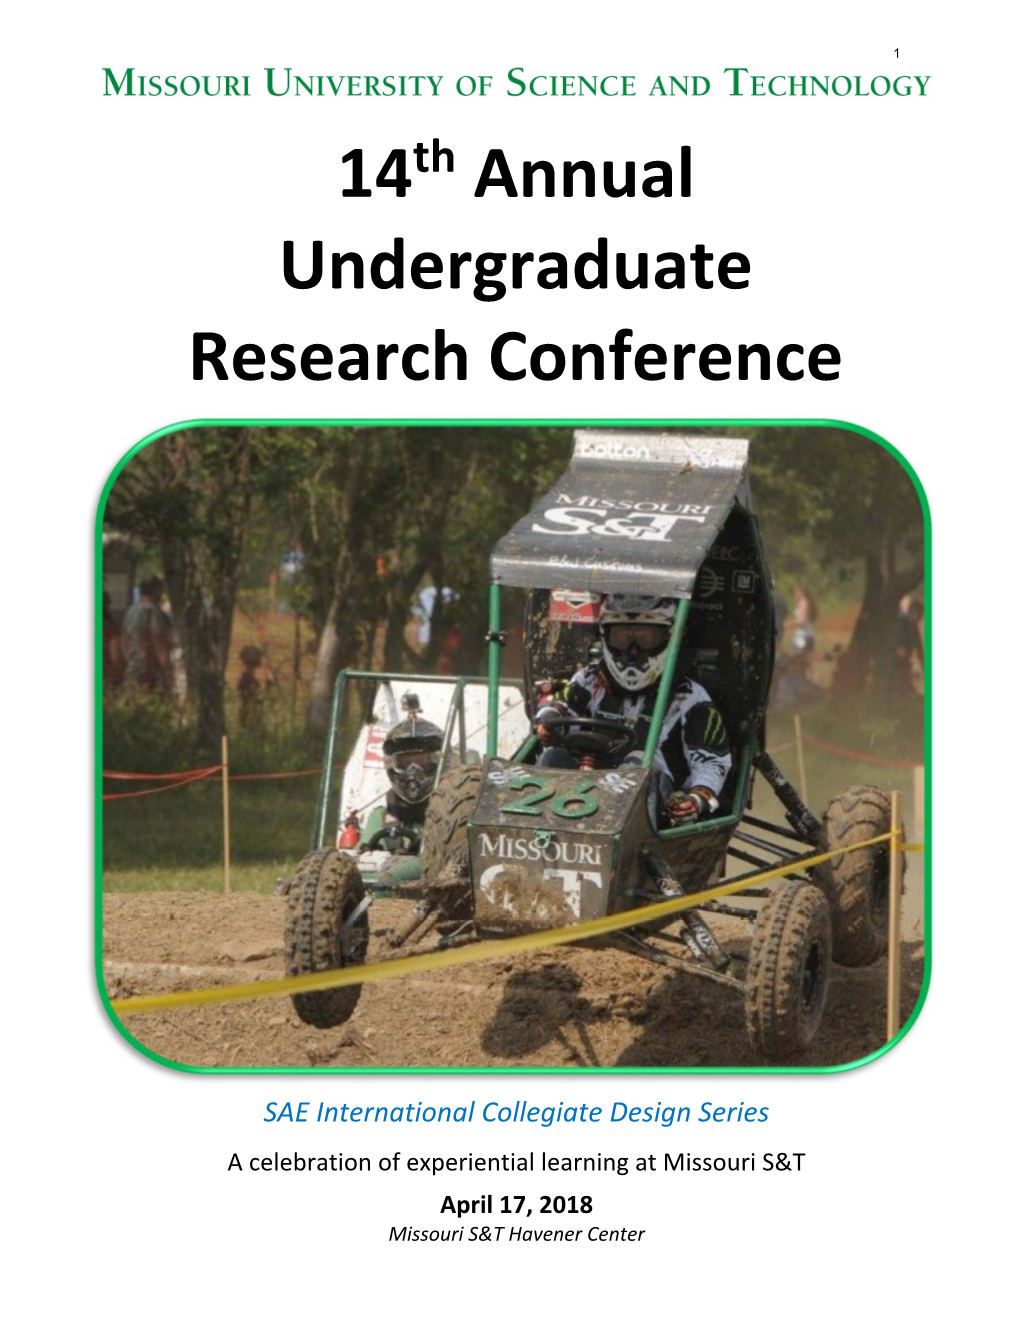 14 Annual Undergraduate Research Conference